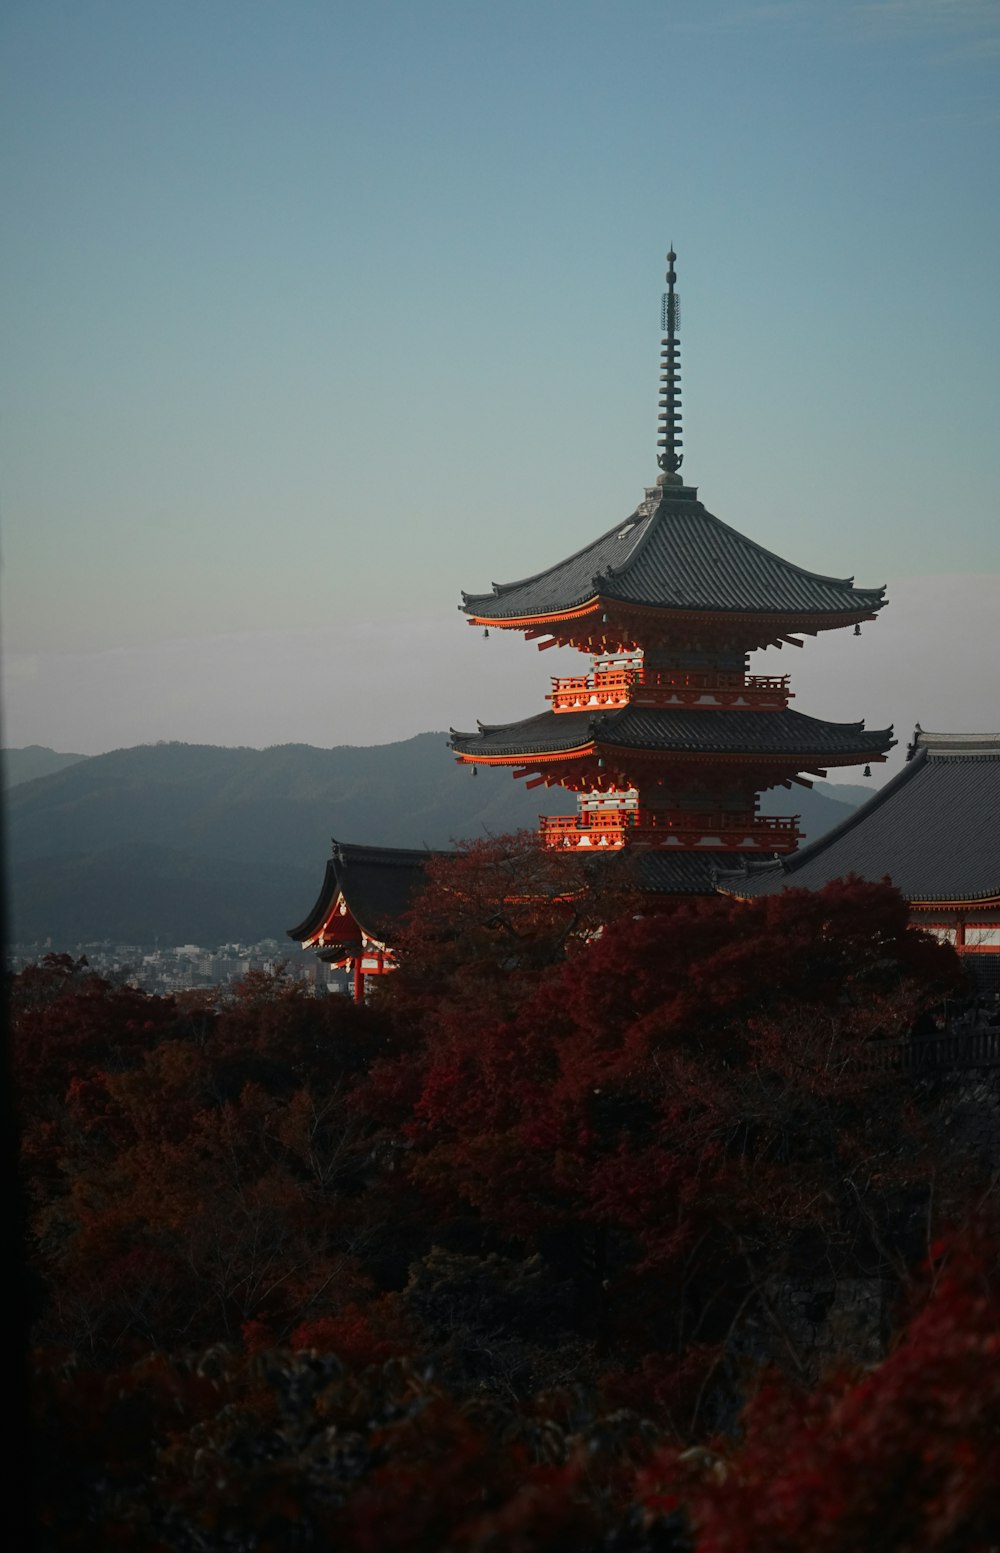 Kiyomizu-dera with a tower